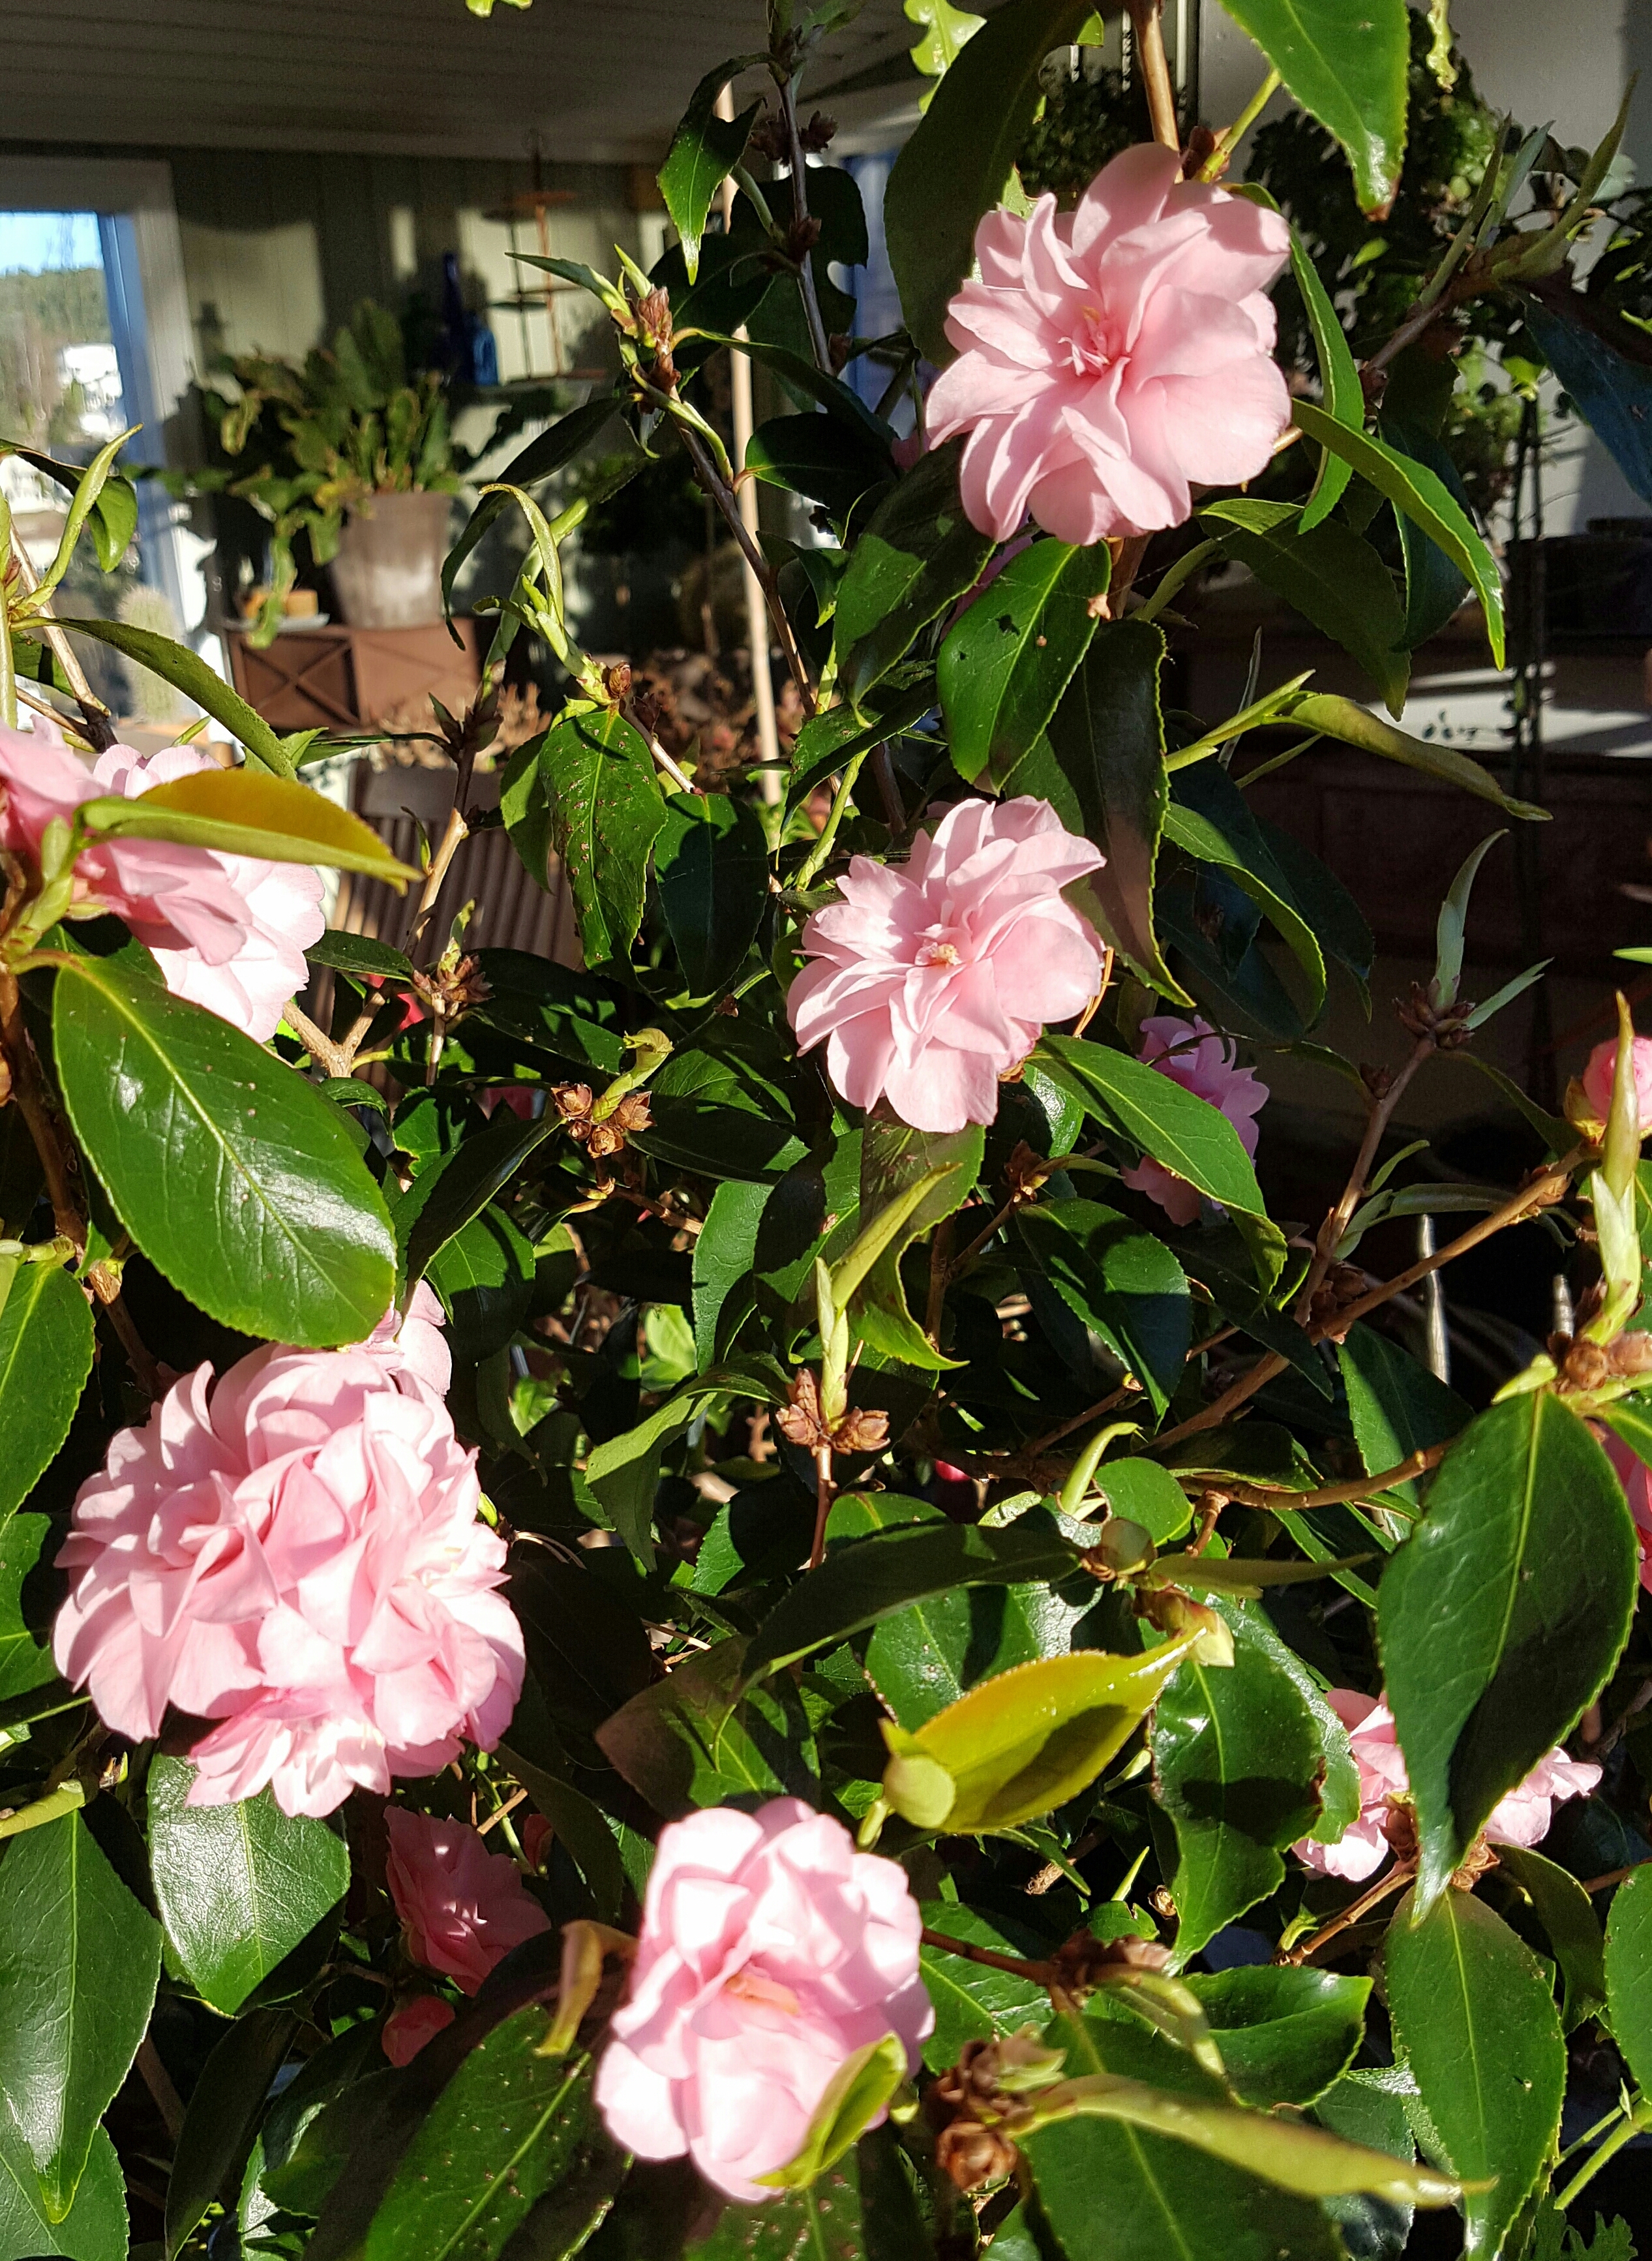 Dronninga i vinterhagen — Camellia japonica eller Kamelia - SkarpiHagen